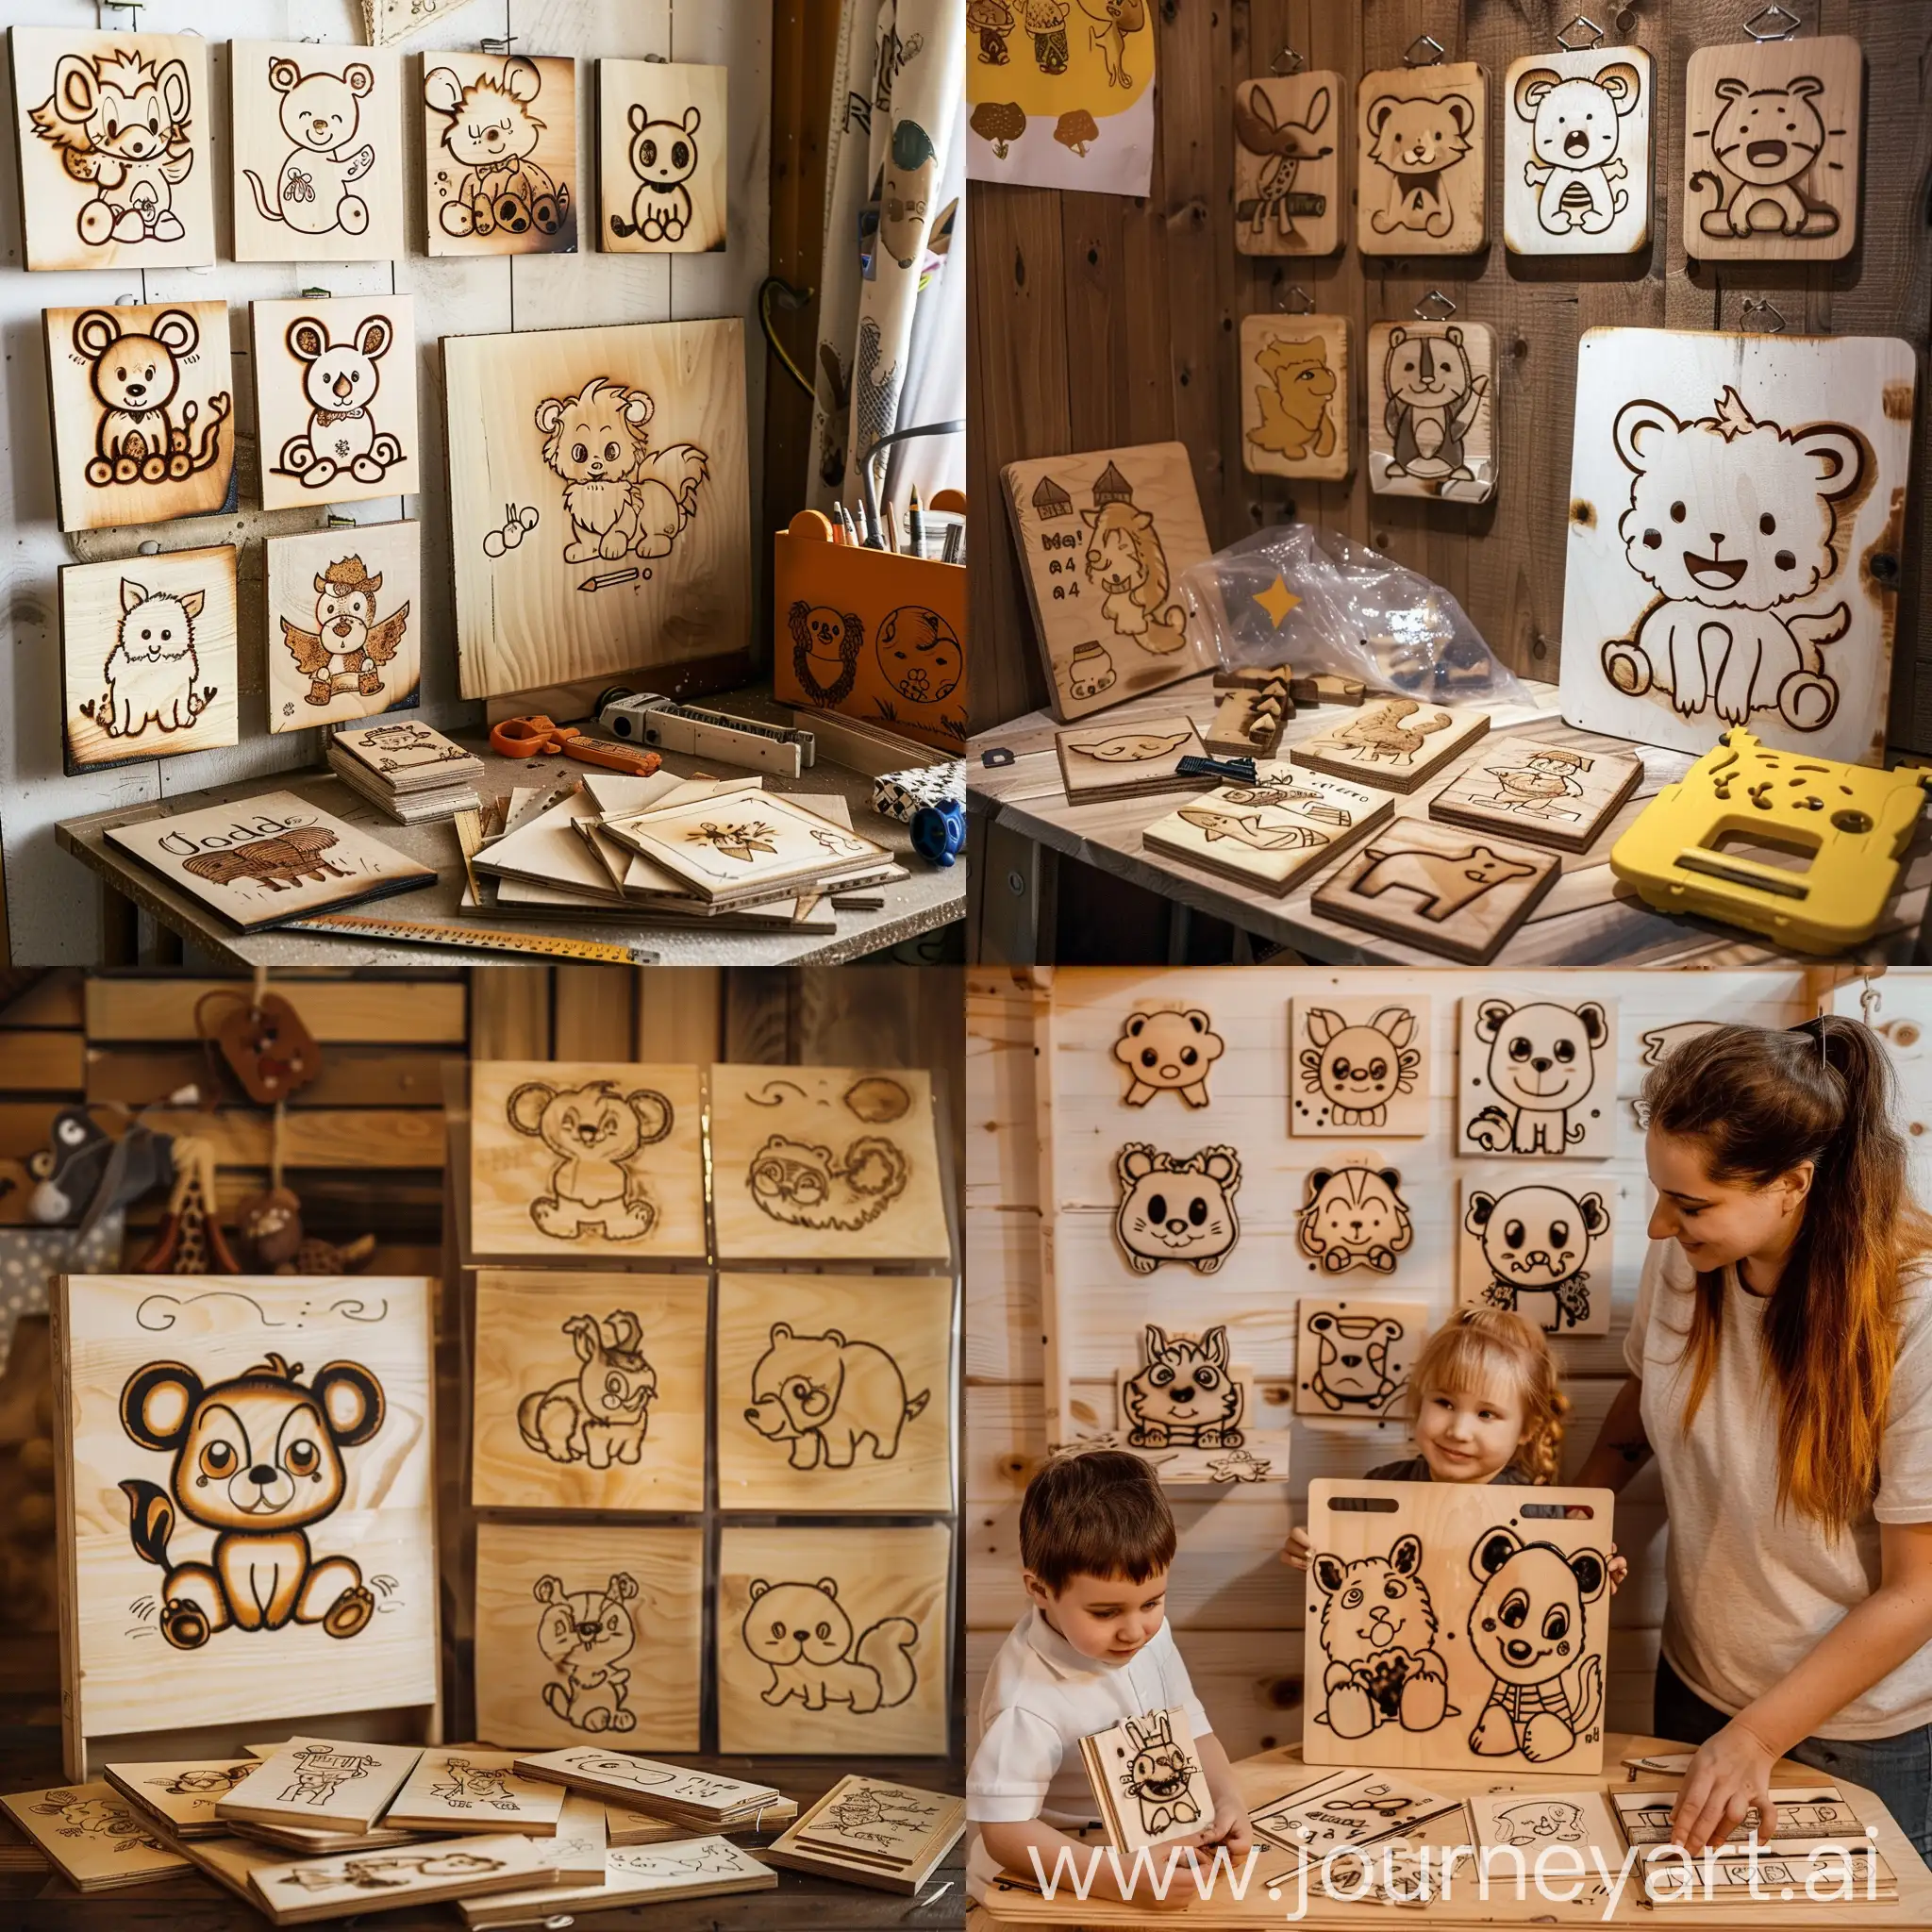 Family-Wood-Burning-Craft-Creating-Cute-Animal-Images-on-Plywood